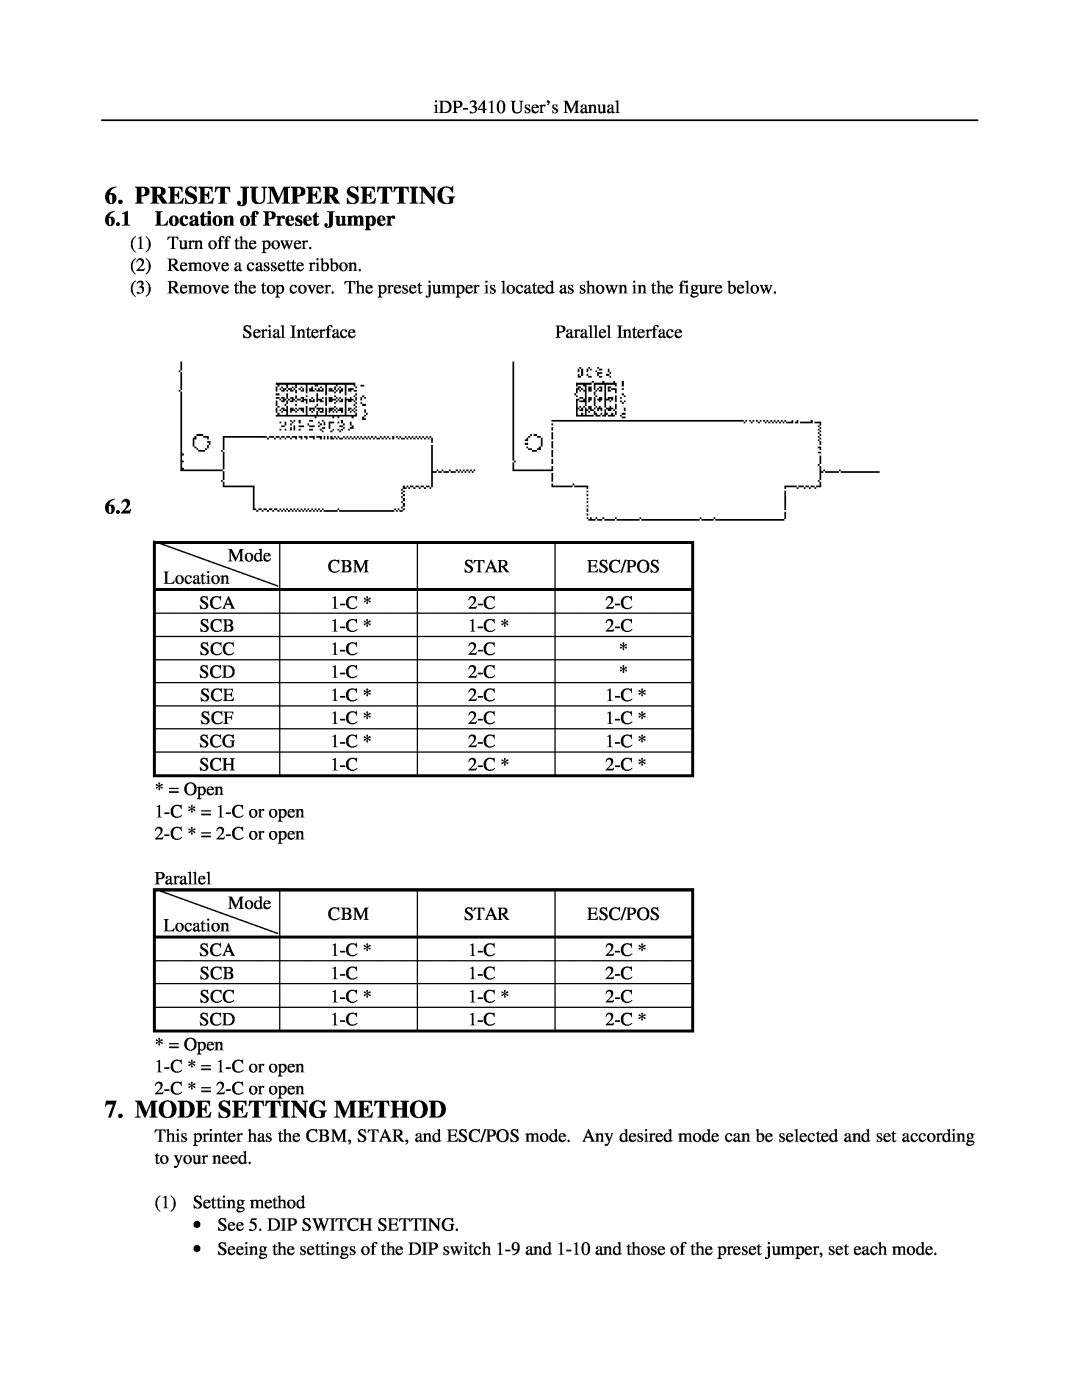 Addlogix iDP-3410 user manual Preset Jumper Setting, Mode Setting Method, Location of Preset Jumper, Preset Jumper Table 